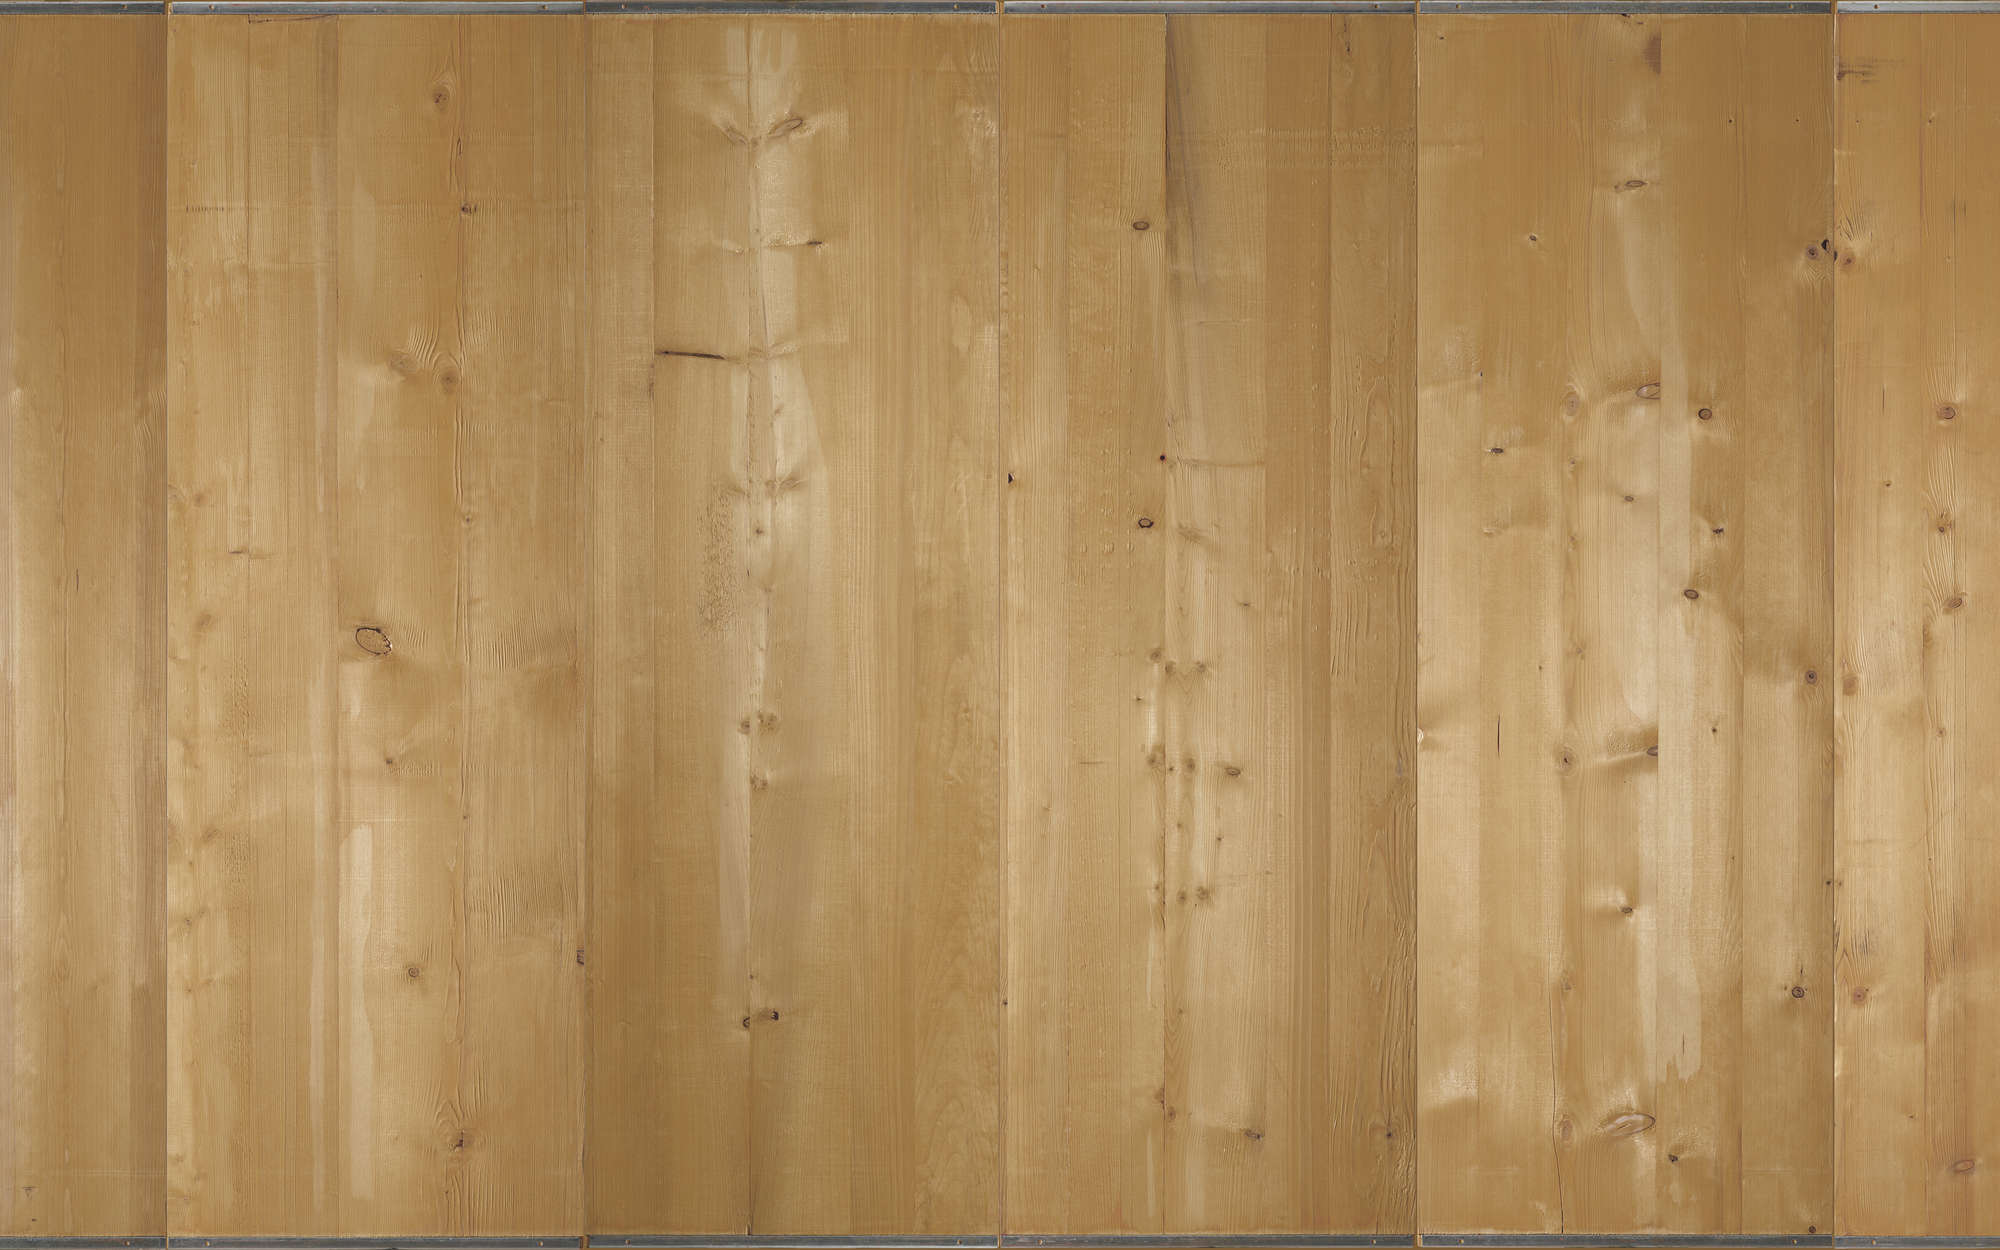             Photo wallpaper light wooden boards - Matt smooth fleece
        